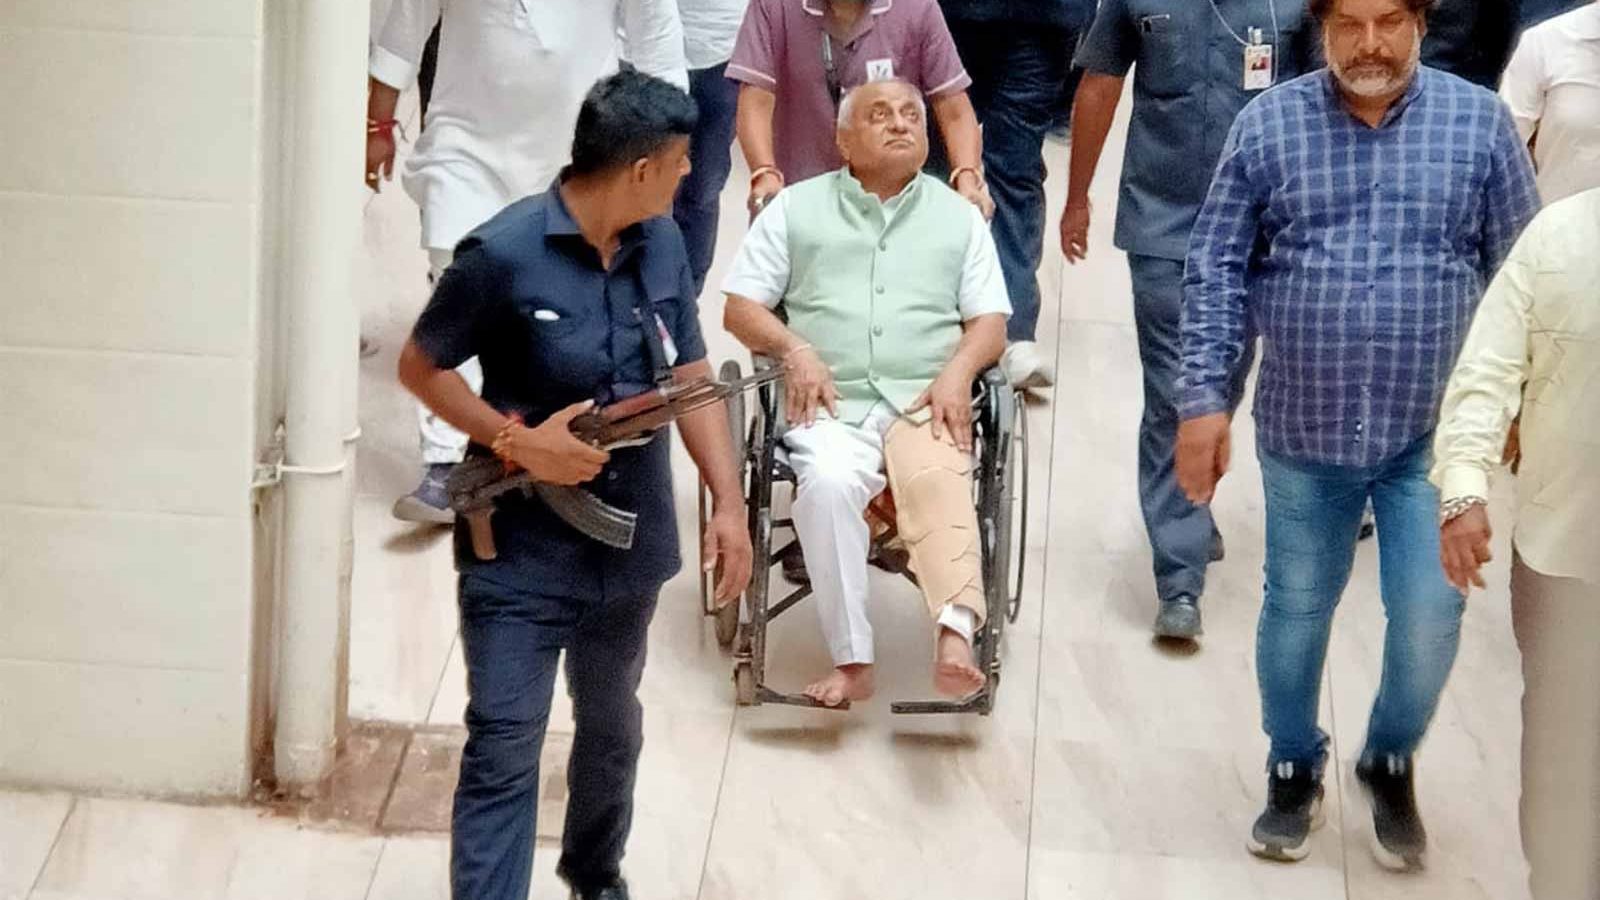 Nitin Patel injured in Kadi after stray cattle attack - રખડતા પશુએ હુમલો  કરતા નીતિન પટેલ ઈજાગ્રસ્ત – News18 Gujarati